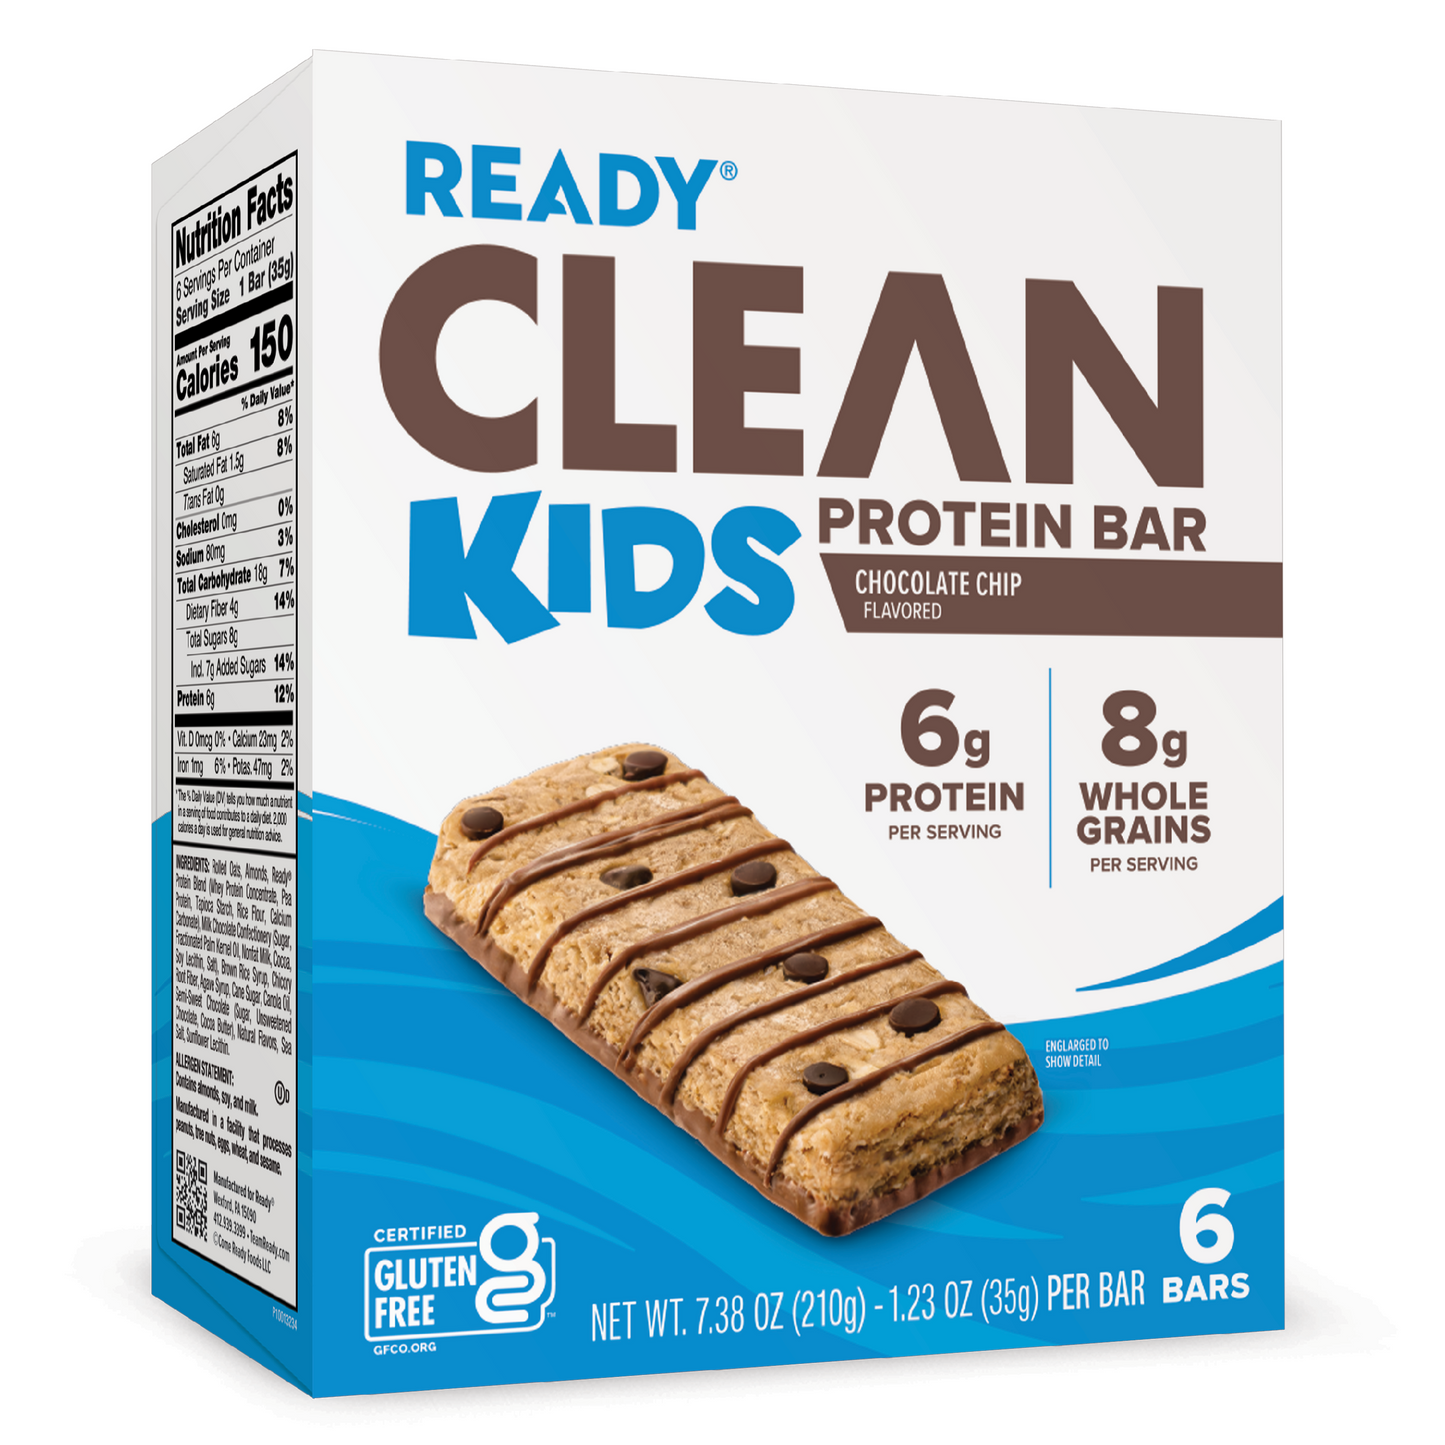 Ready® Clean Kids Whole Grain Protein Bar Chocolate Chip